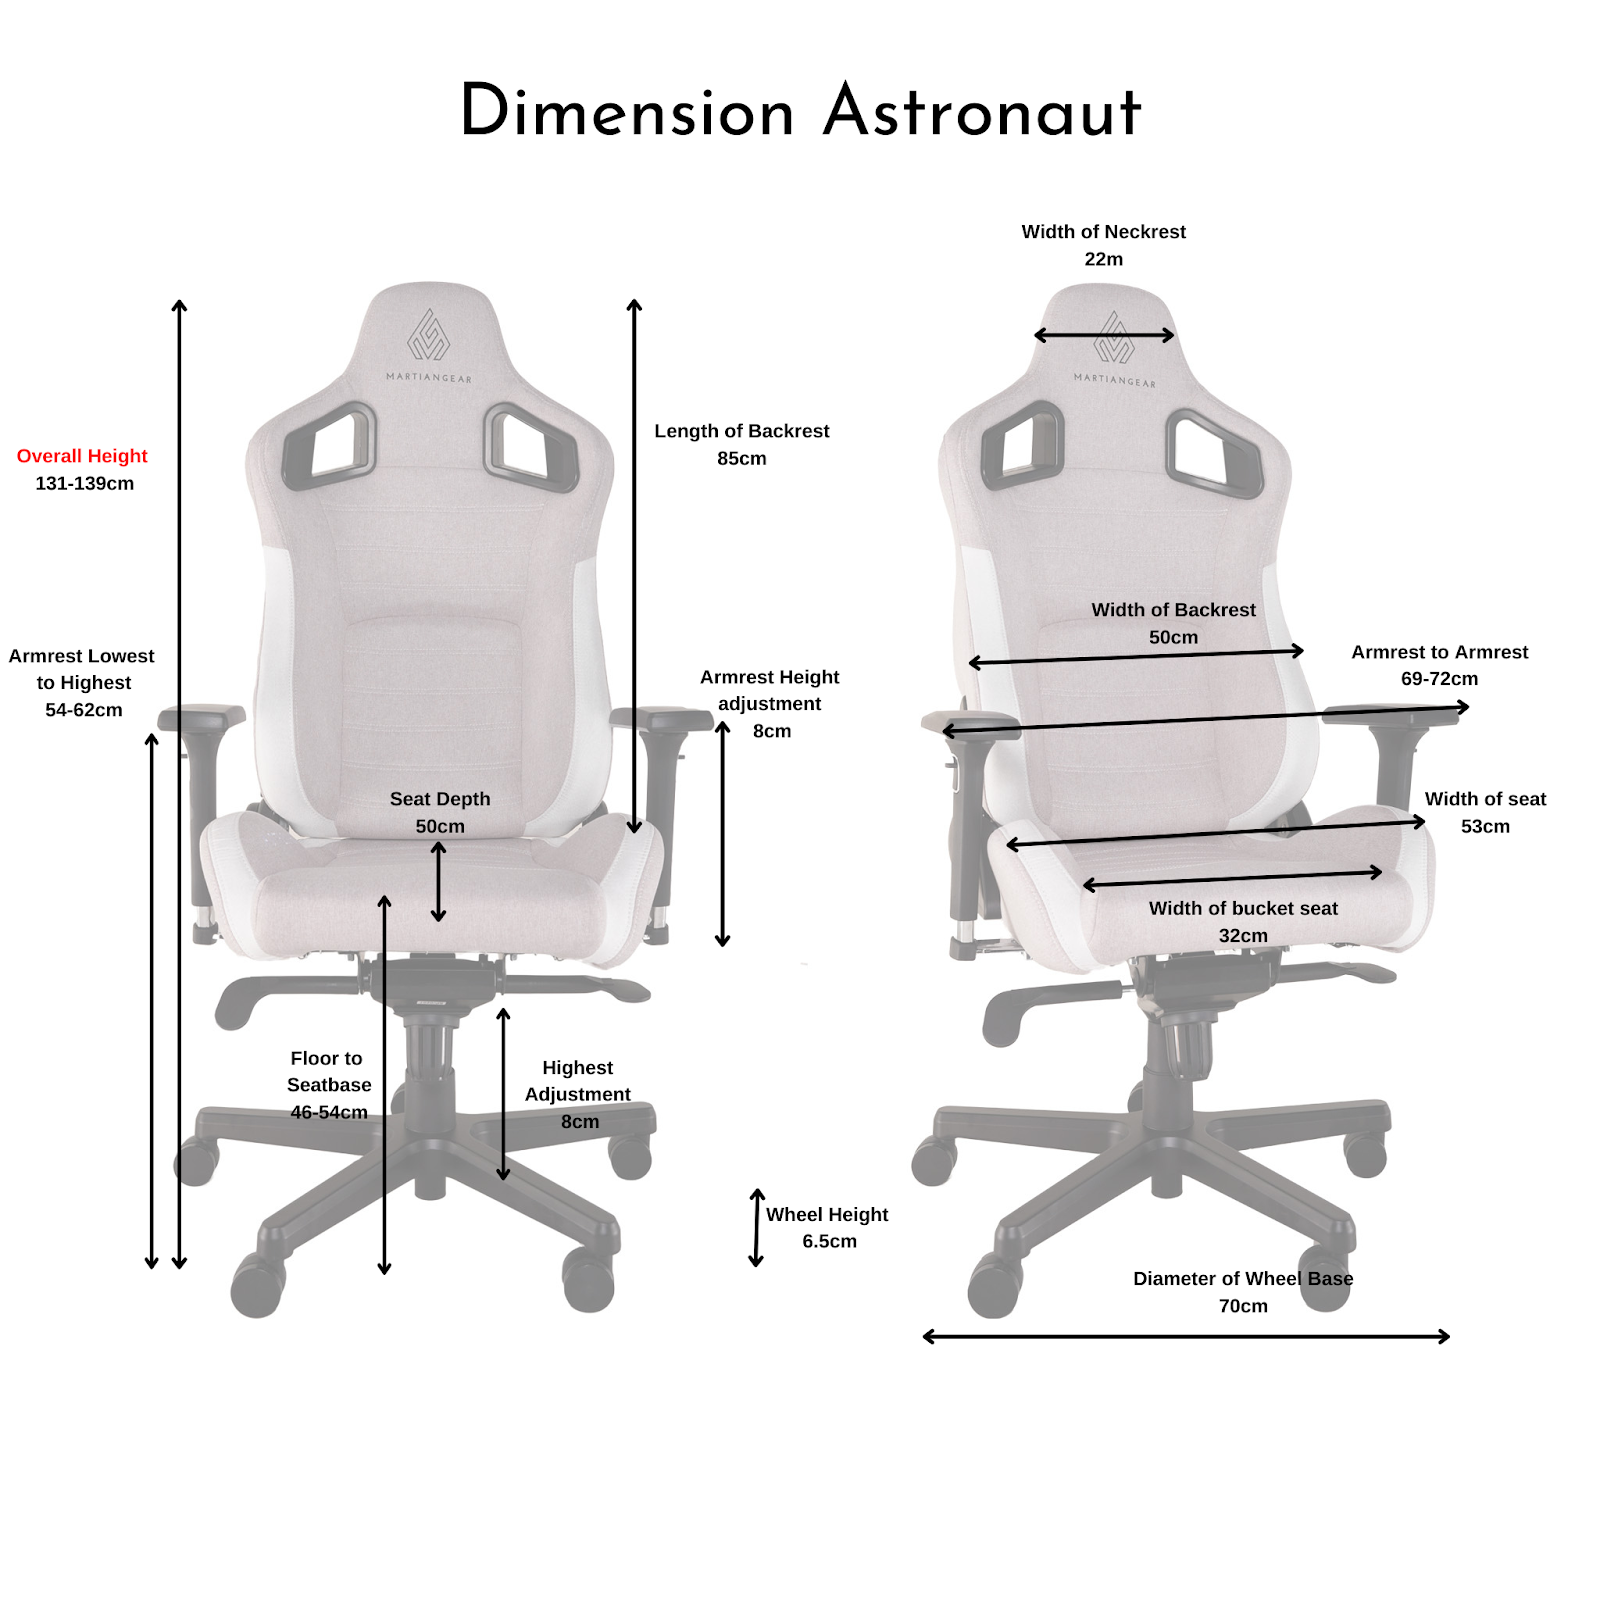 Martiangear Astronaut series Gaming Chair Dimensions